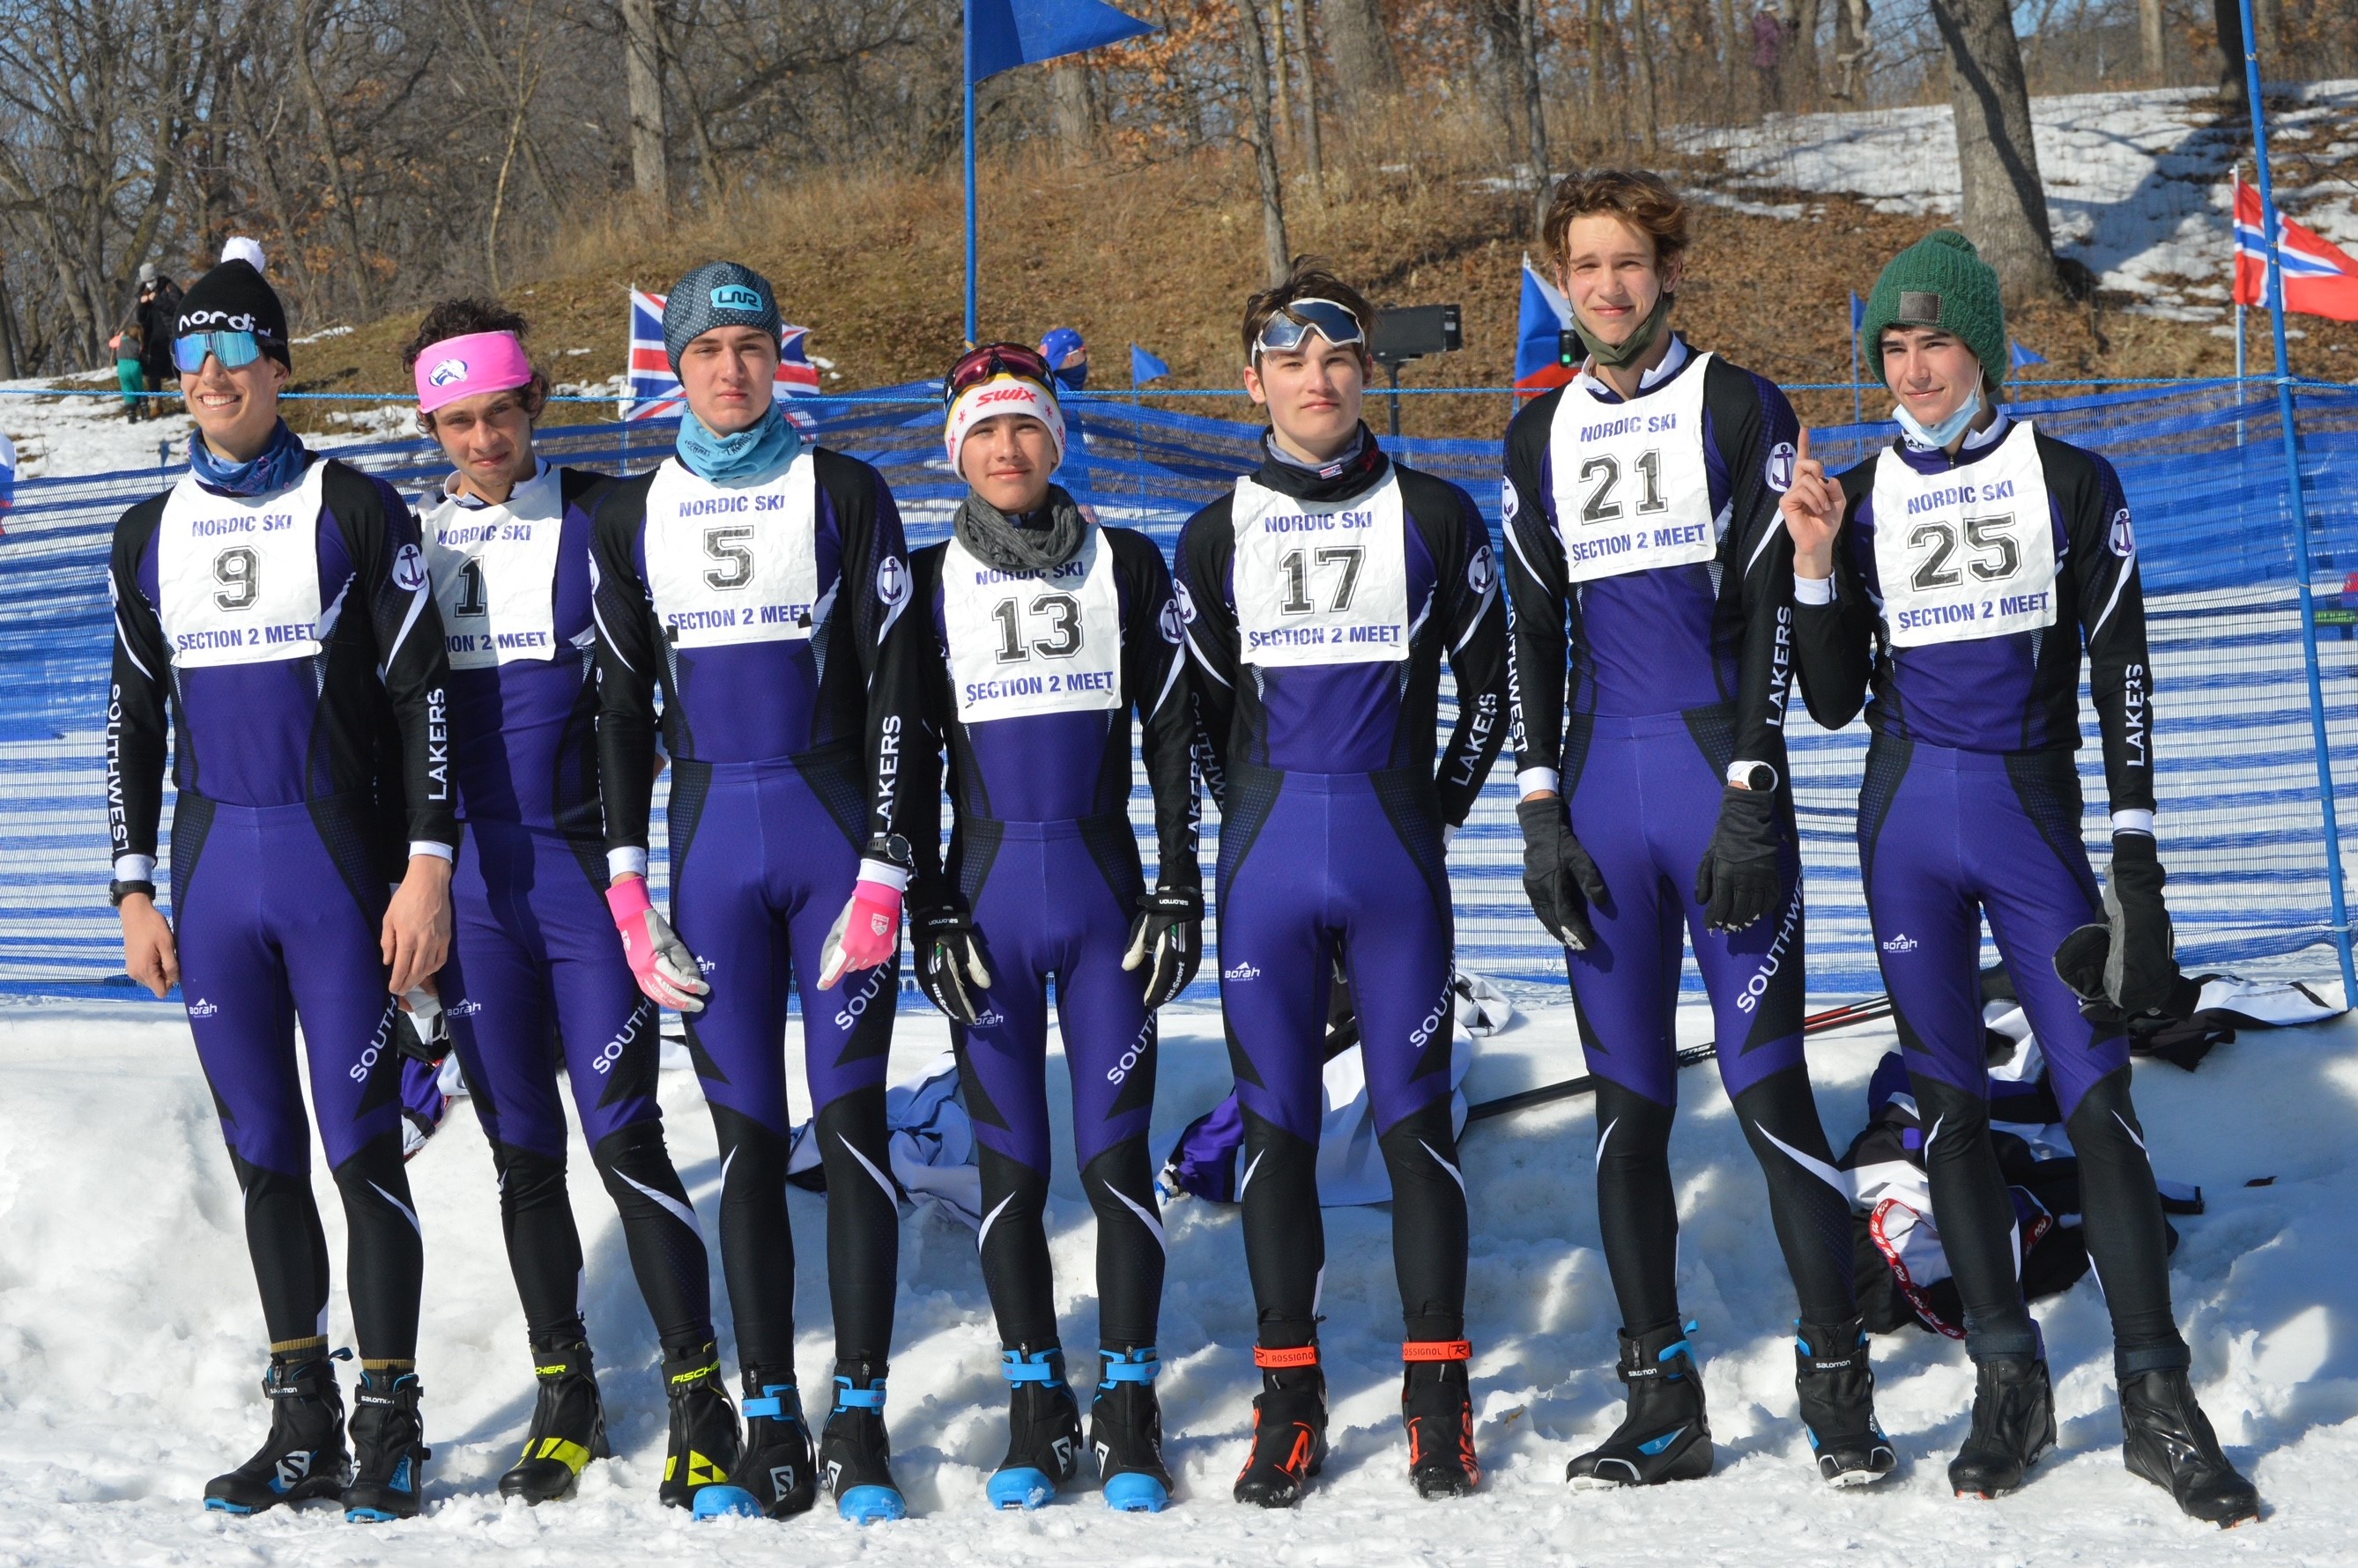 Minneapolis Southwest wins Boys Nordic Skiing team champions